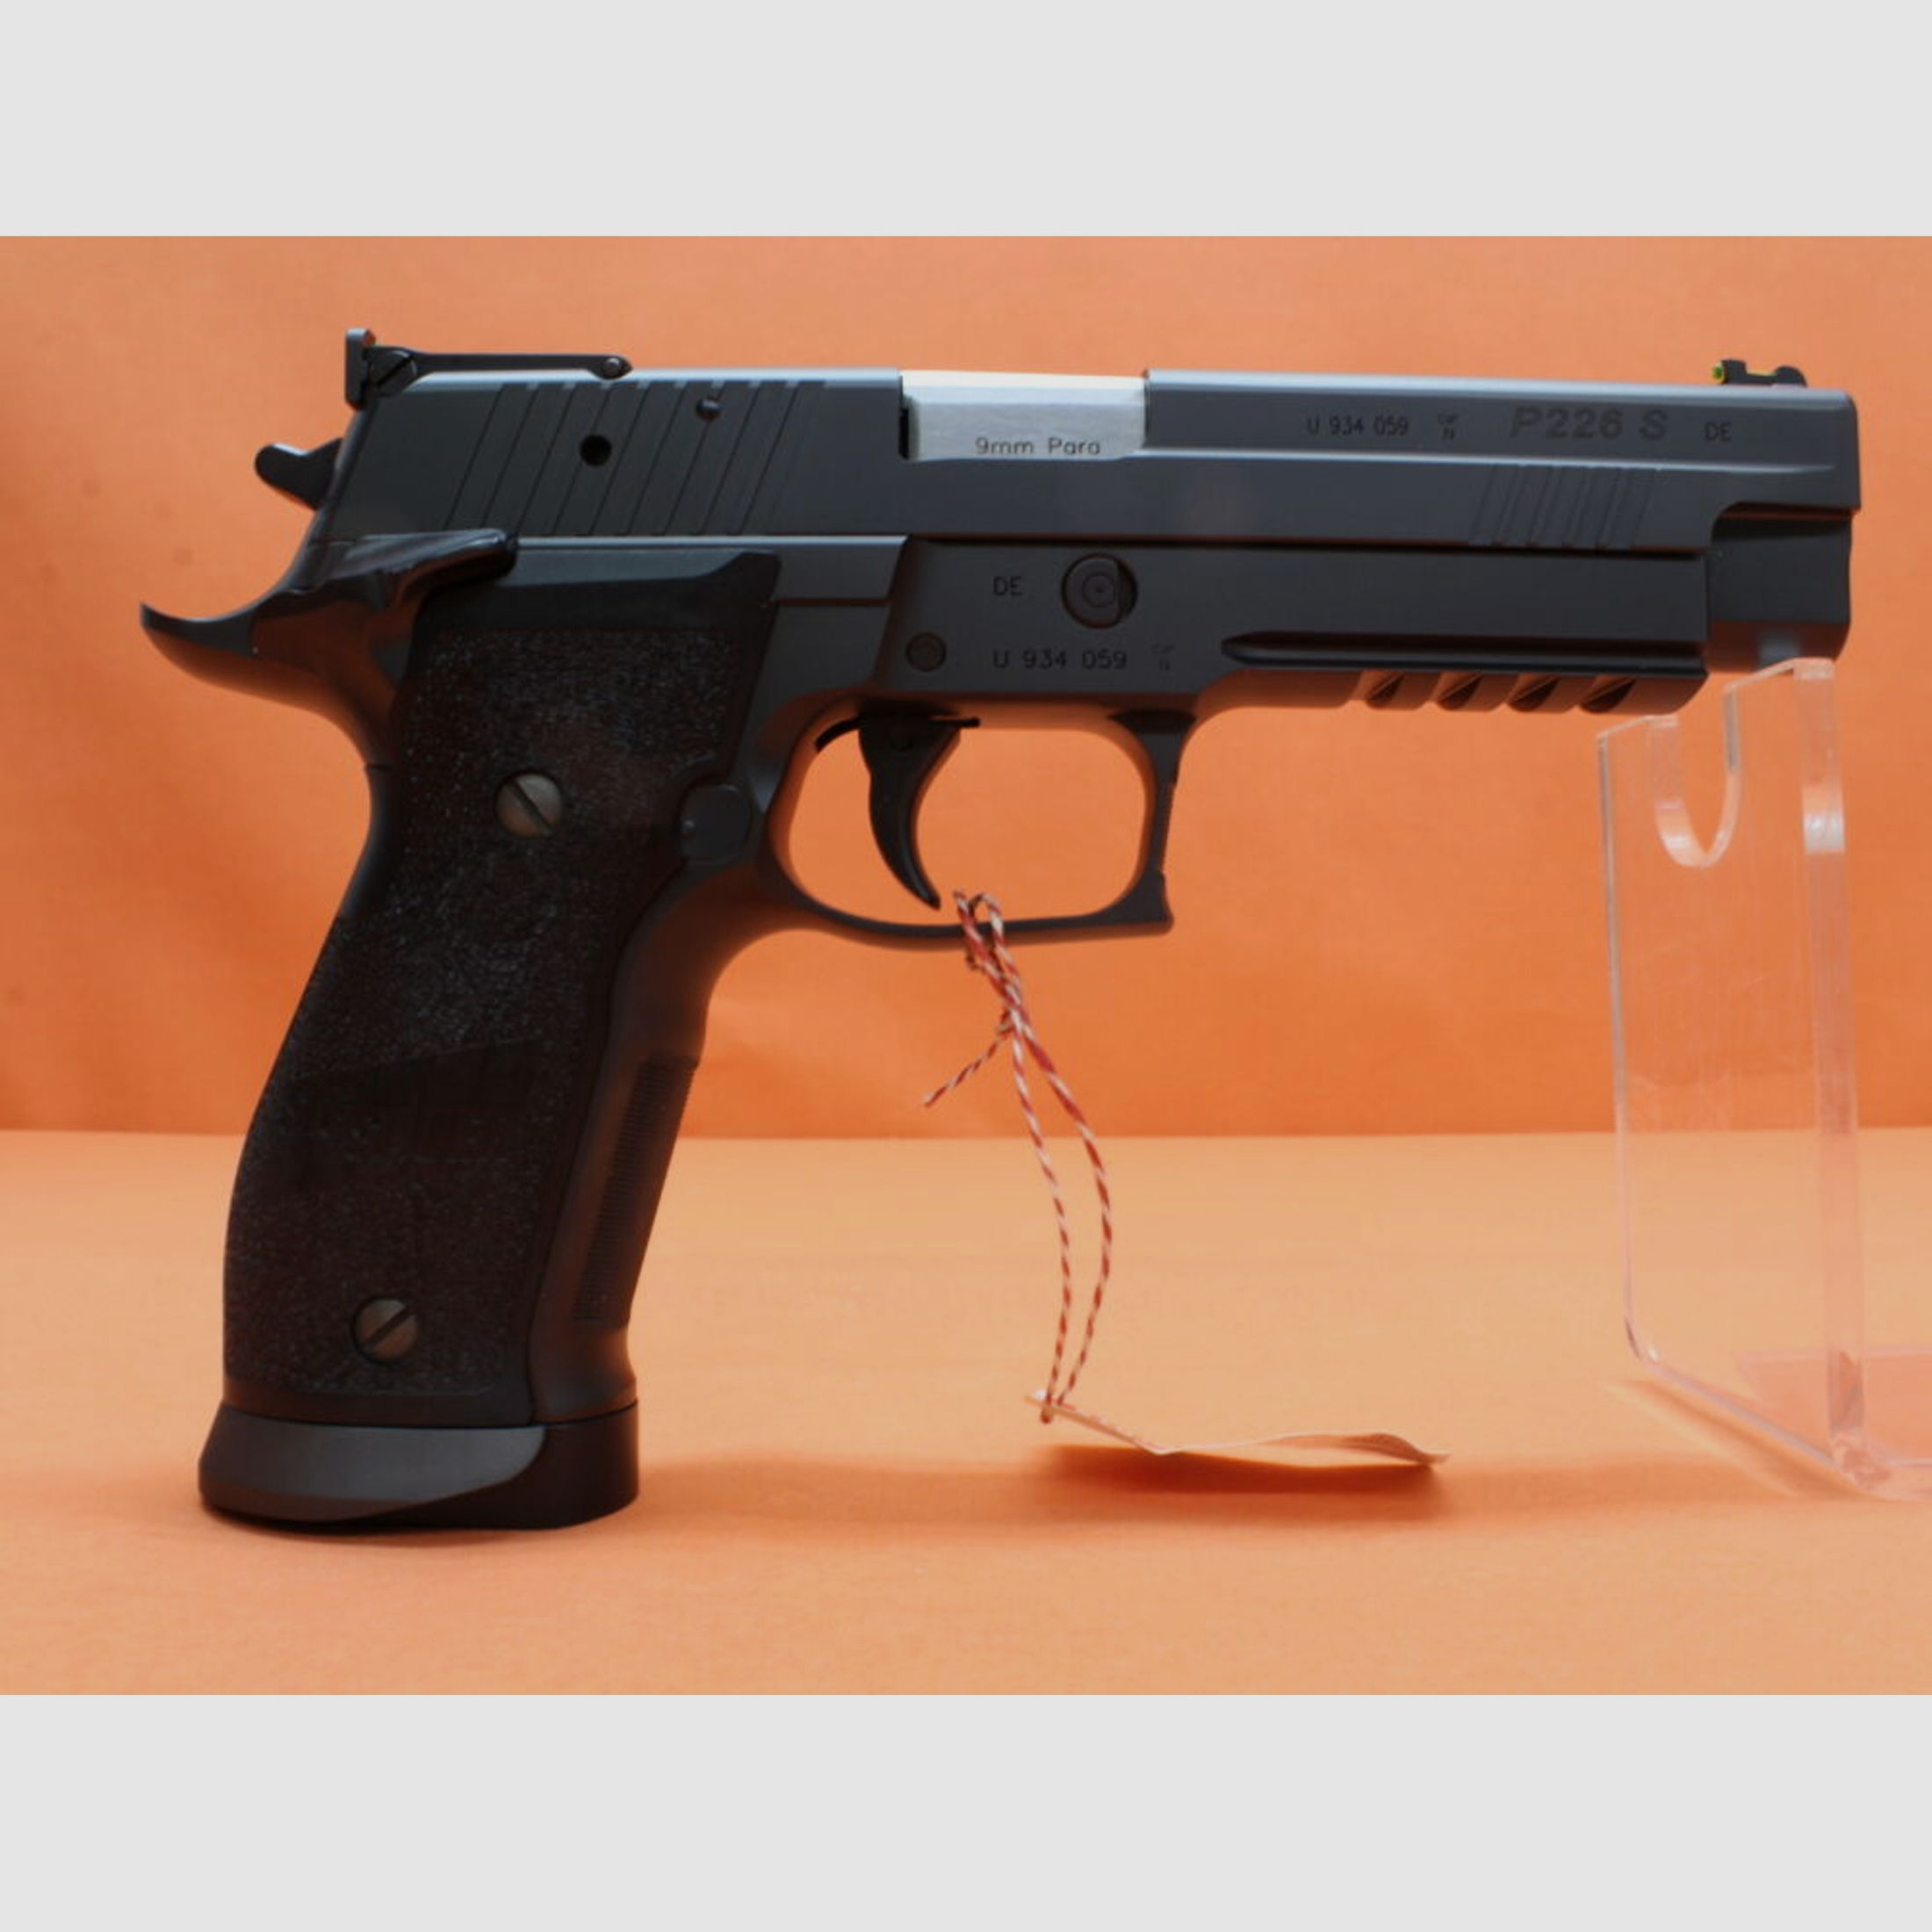 SIG Sauer	 Ha.Pistole 9mmLuger SIG Sauer P226S X-FIVE PRACTICAL Final Edition 5" Lauf/ Fiberkorn (9mmPara/9x19)